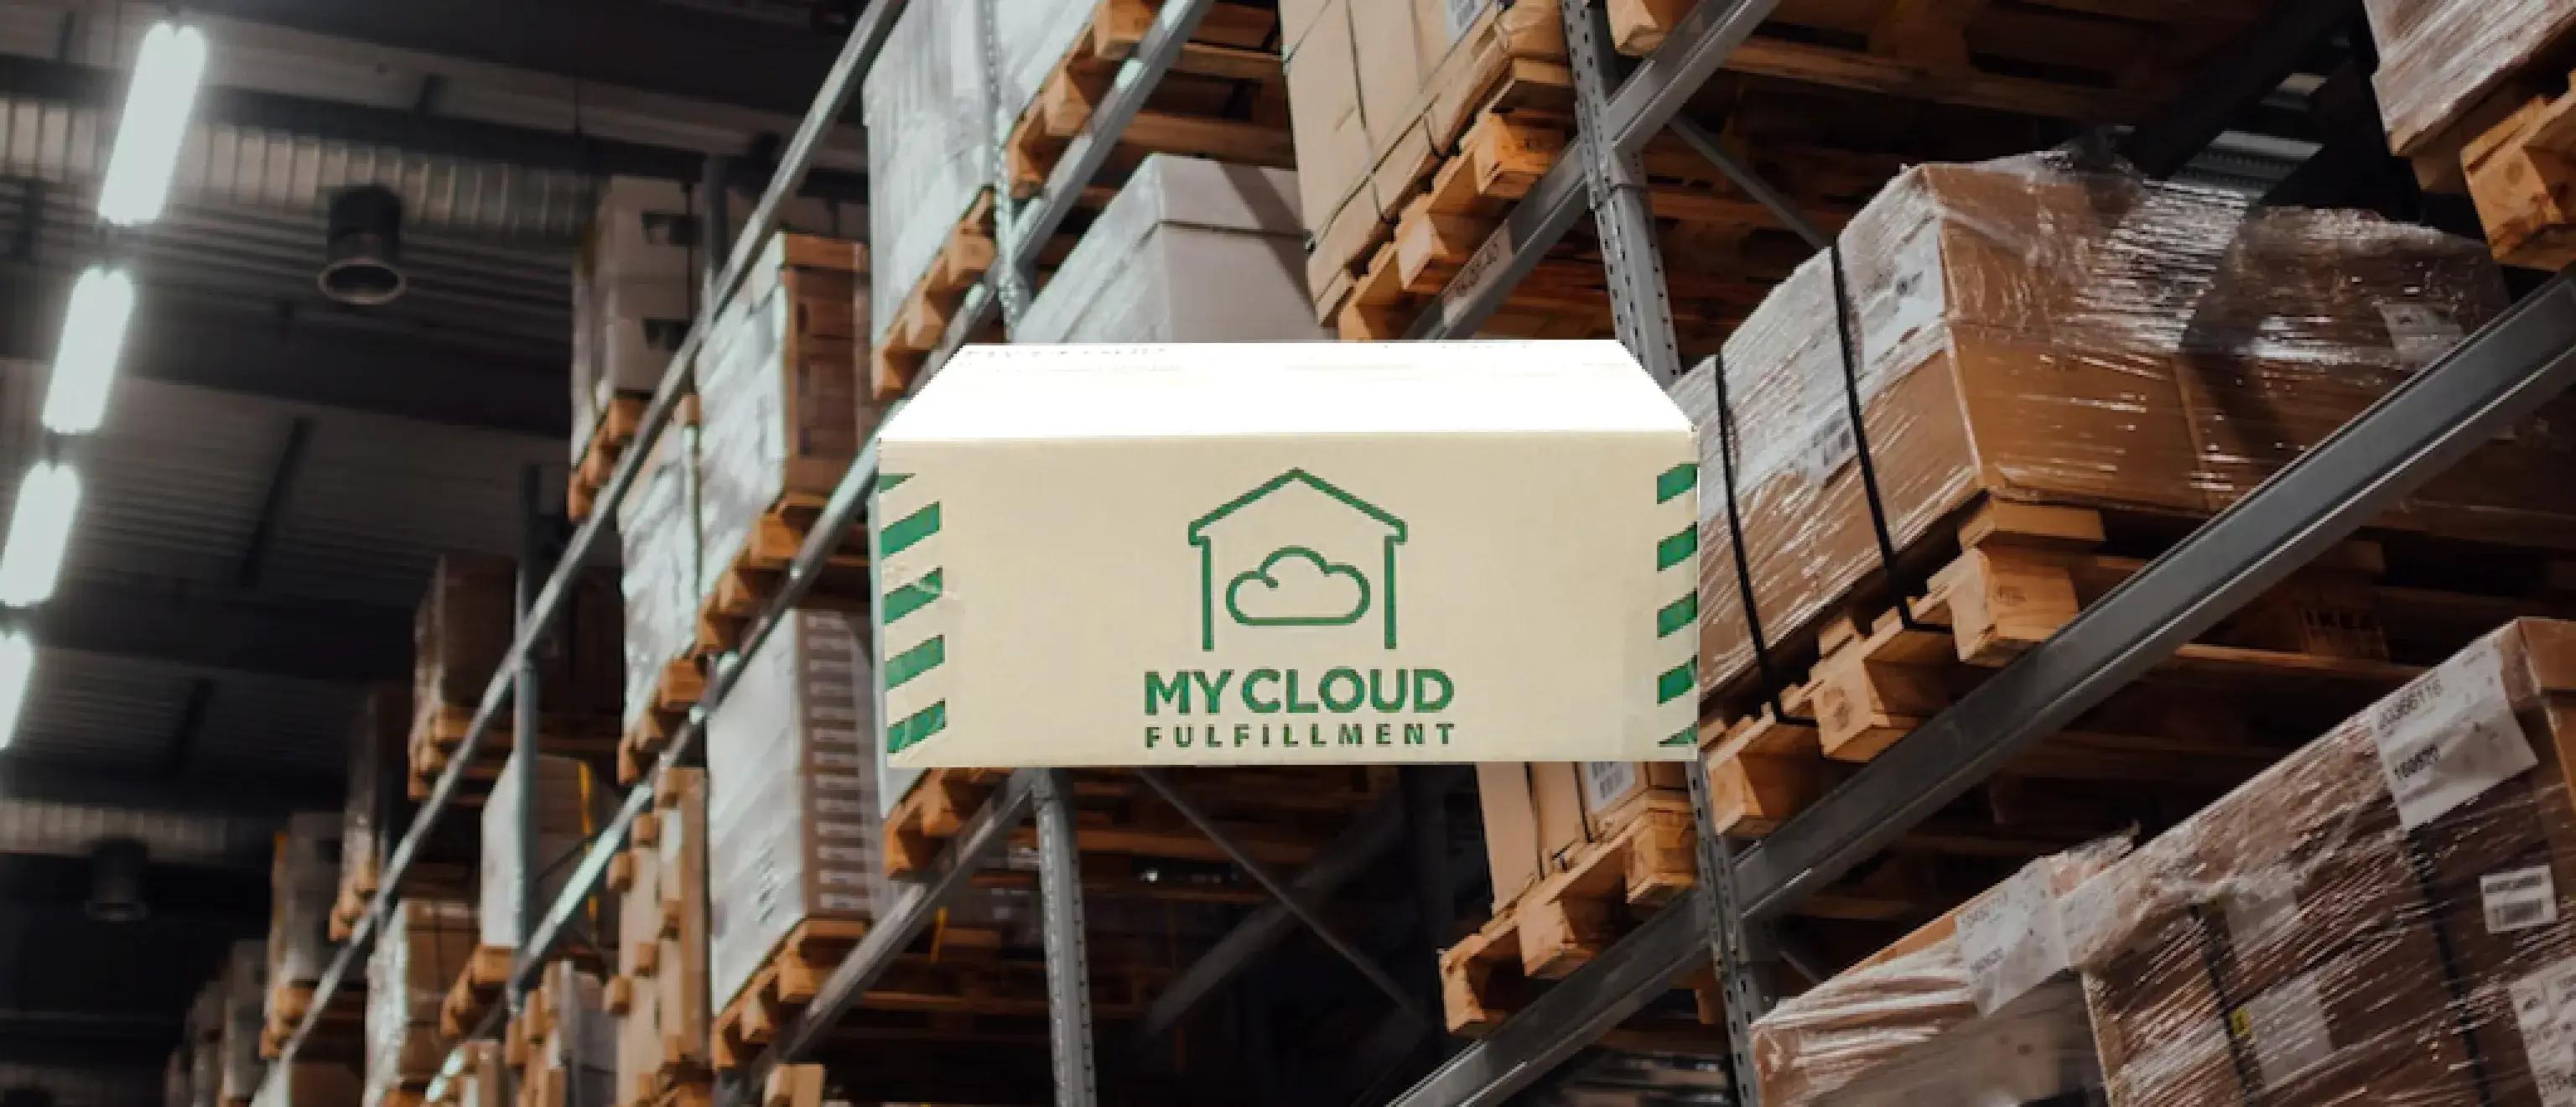 Case Study MyCloud Fulfillment : Warehouse management system